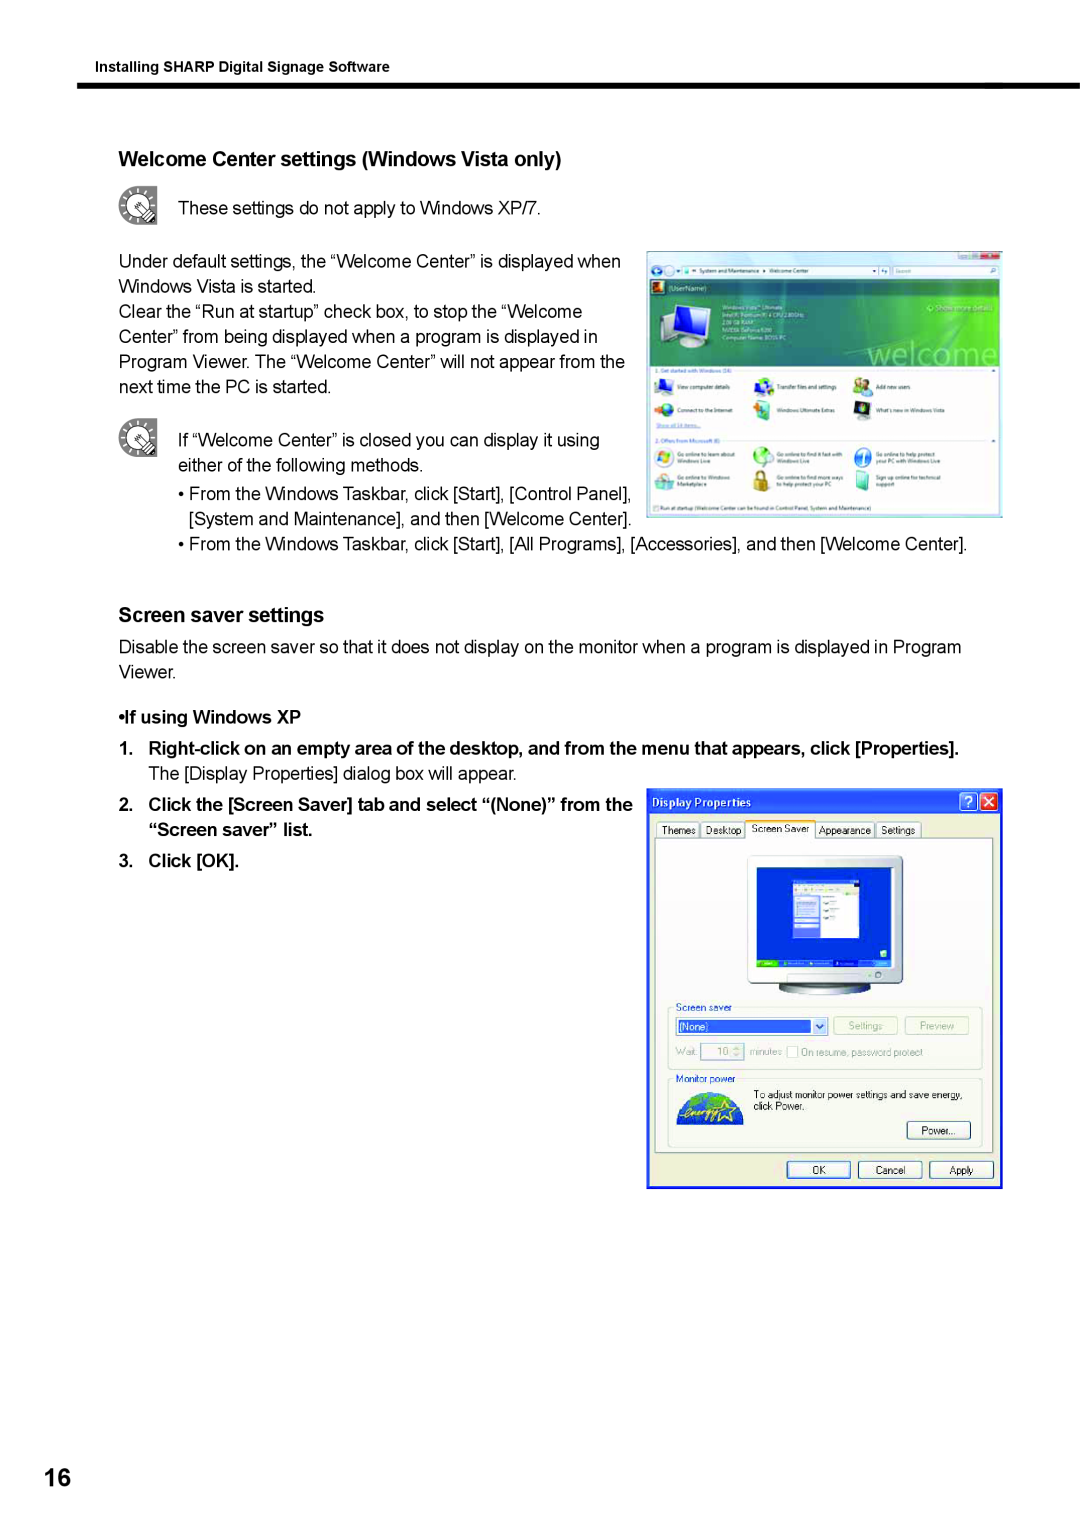 Sharp PNSV01 Welcome Center settings Windows Vista only, Screen saver settings, If using Windows XP, Click OK 